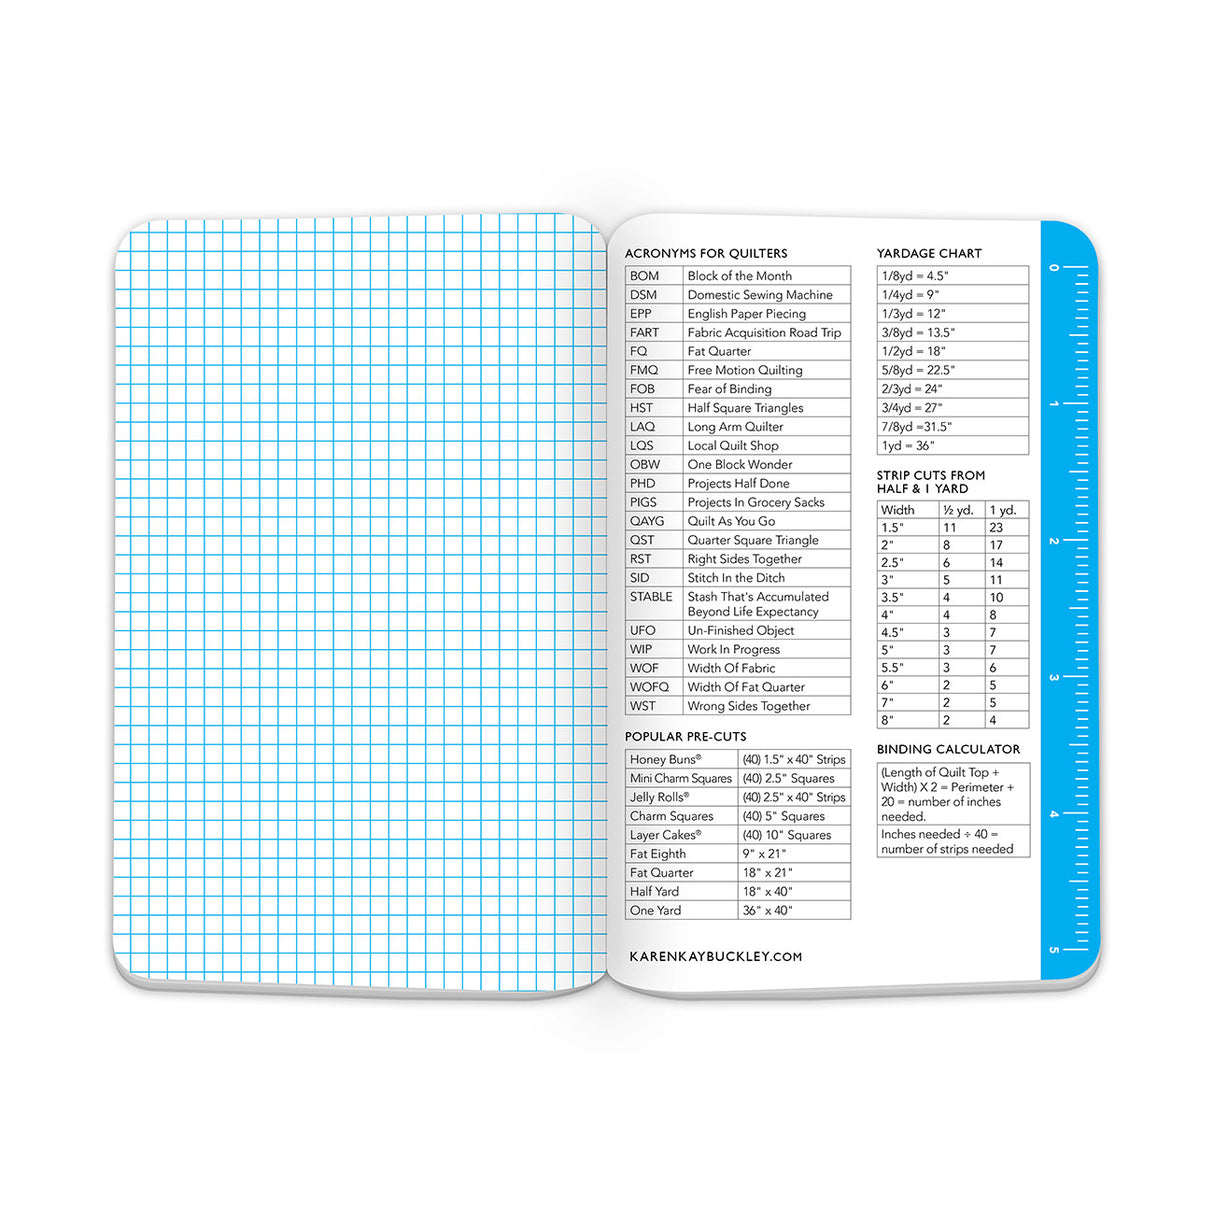 Quilt Notes Graph Paper Notebooks by Karen K Buckley